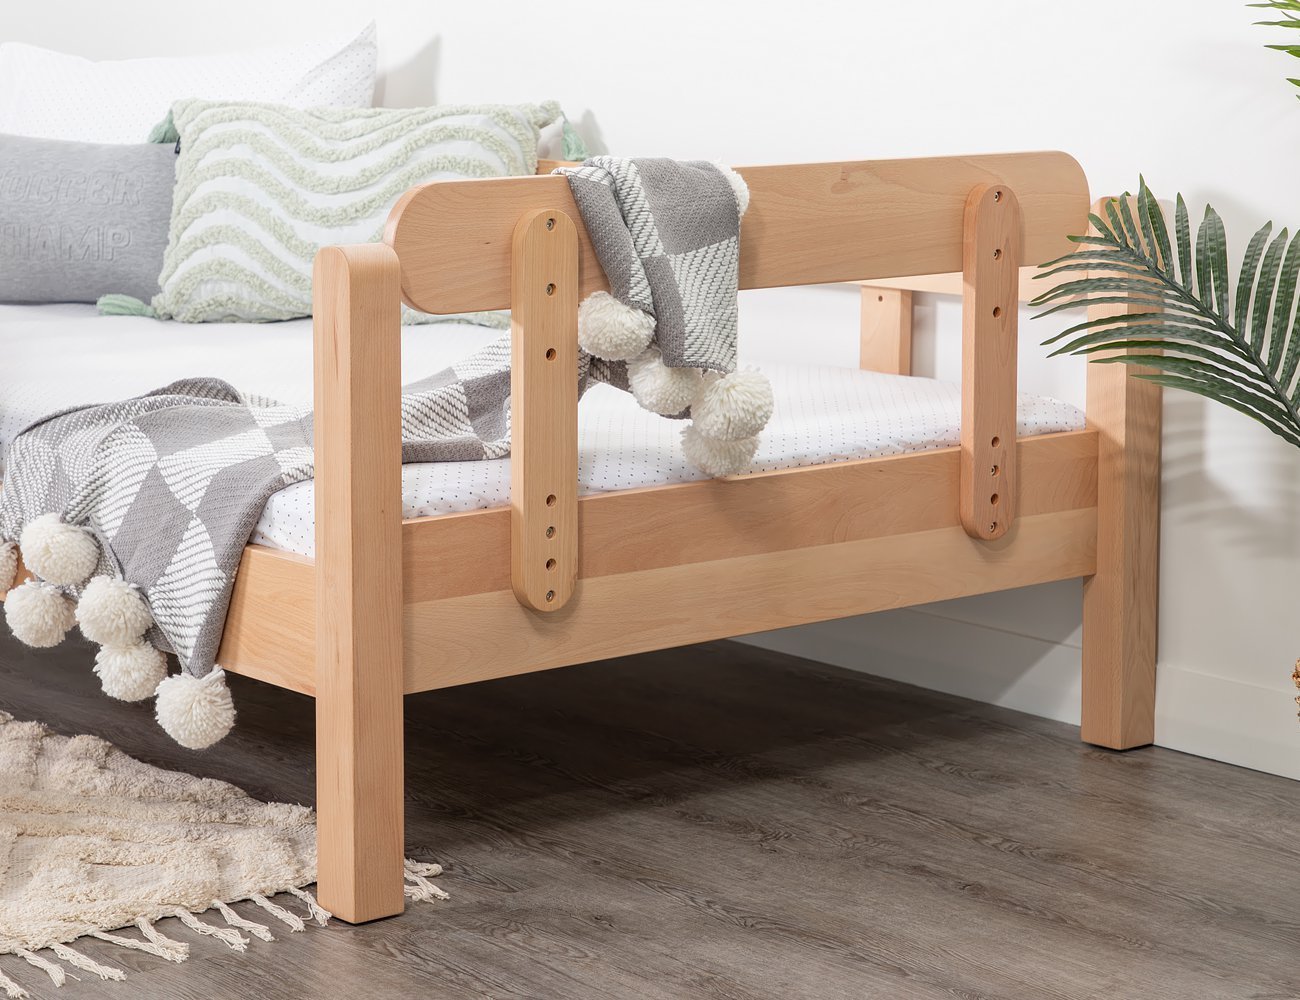 Tree - King Single Bed Frame + Mattress Set @ Crazy Sales - We have the